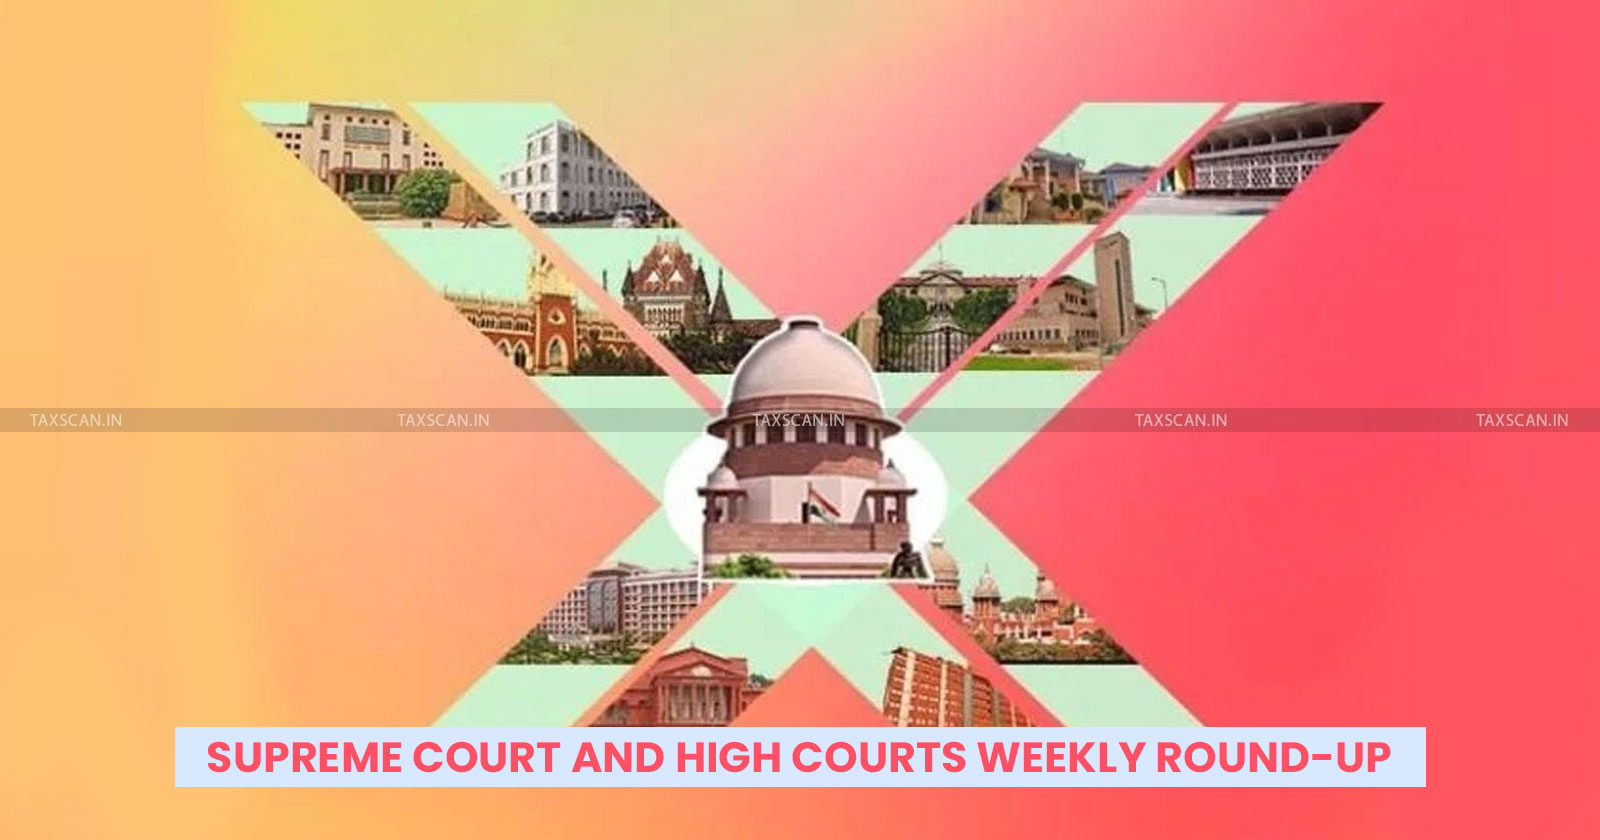 Supreme court weekly round up - High court weekly round up - Weekly round up - Supreme court - High court - TAXSCAN